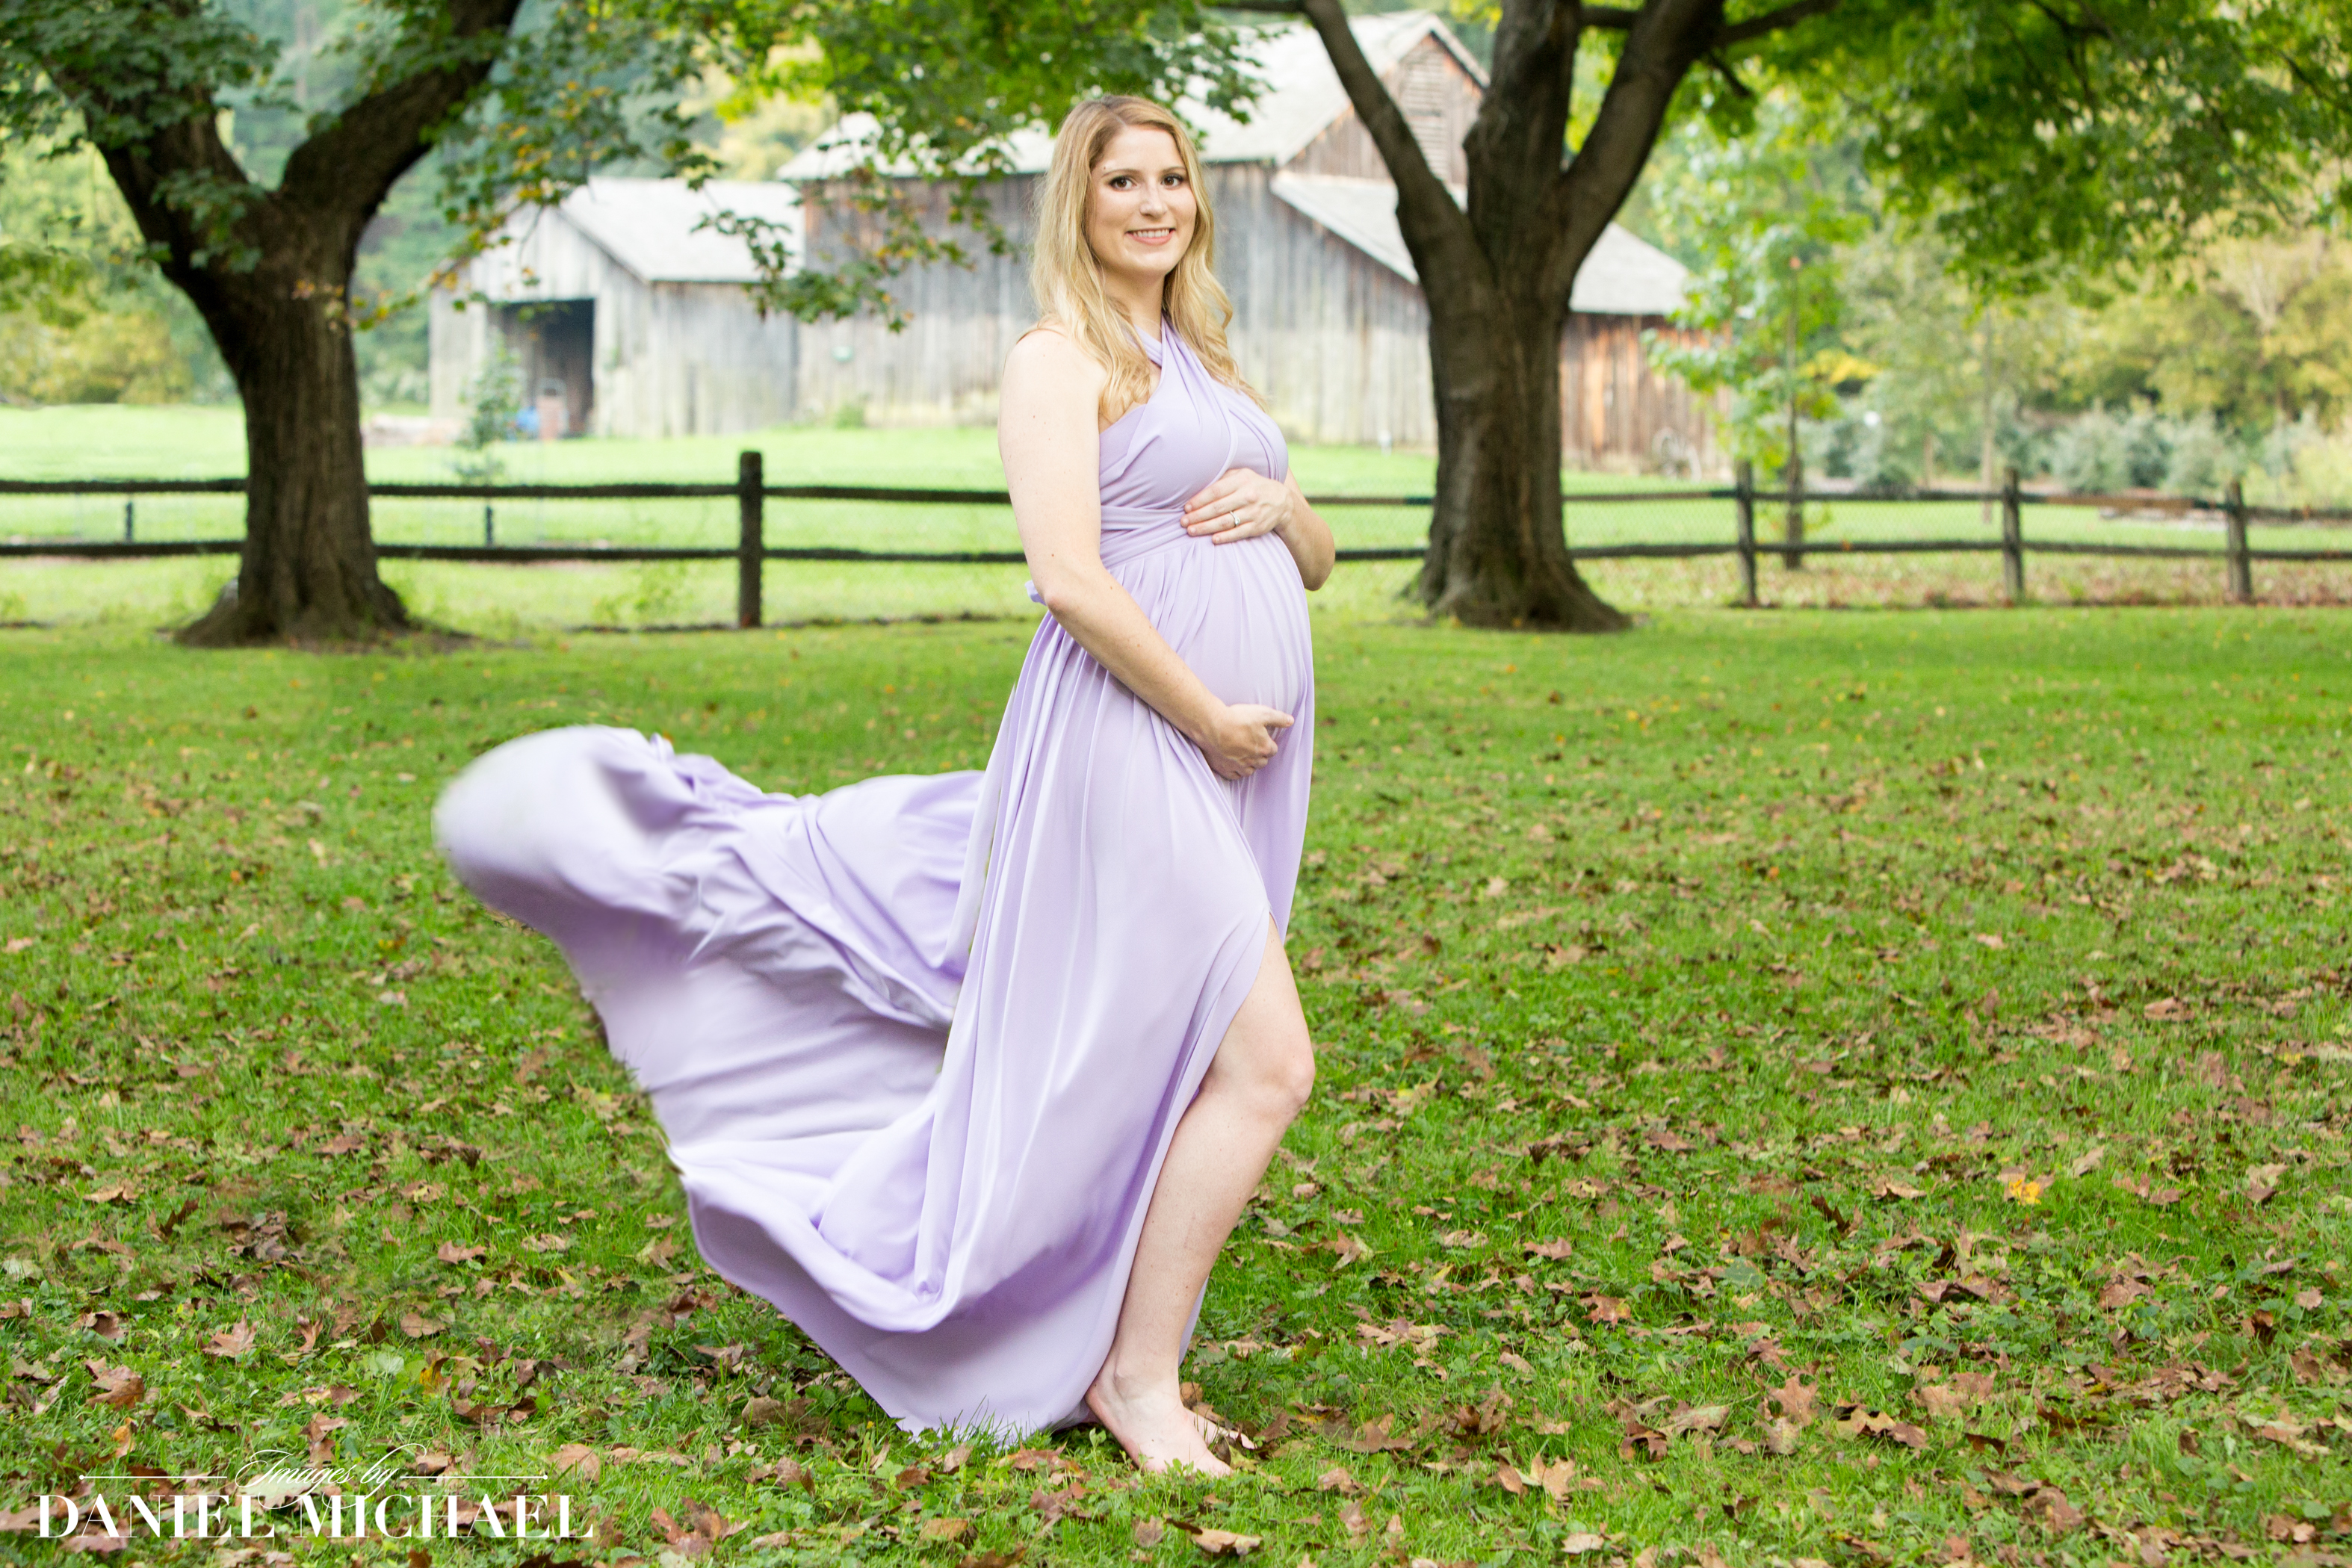 Sharon Woods Maternity Photography